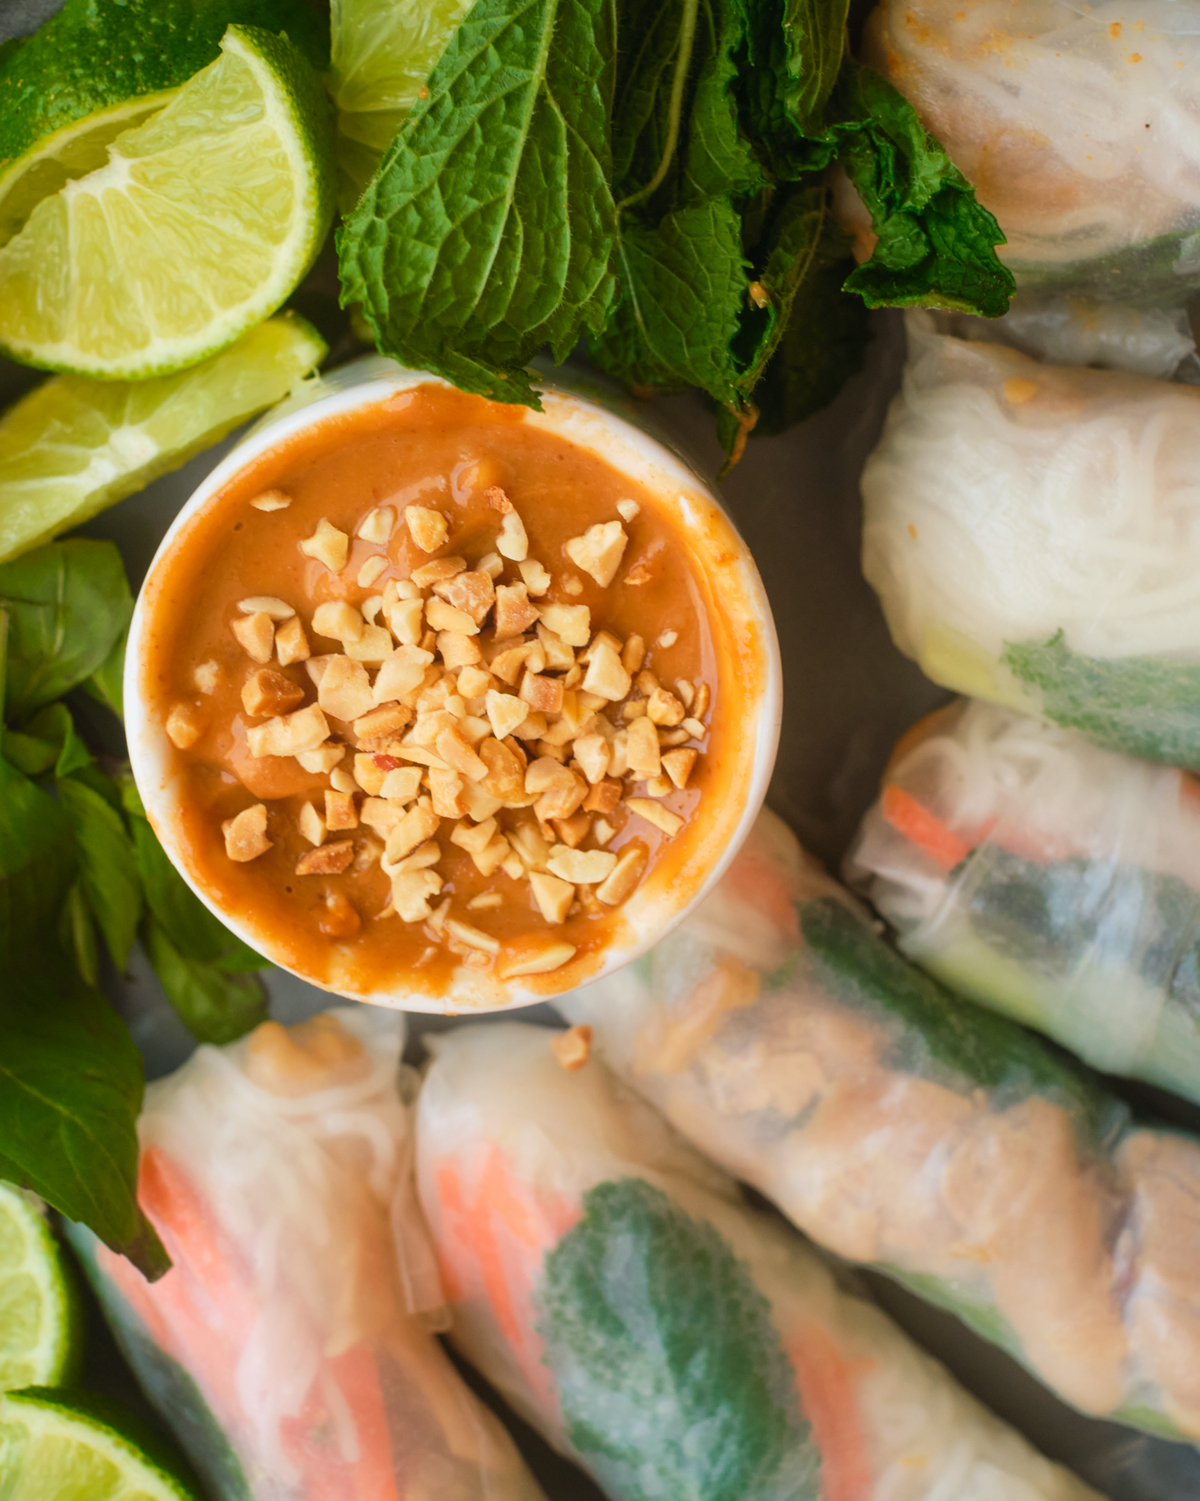 How to Make Vietnamese Peanut Sauce